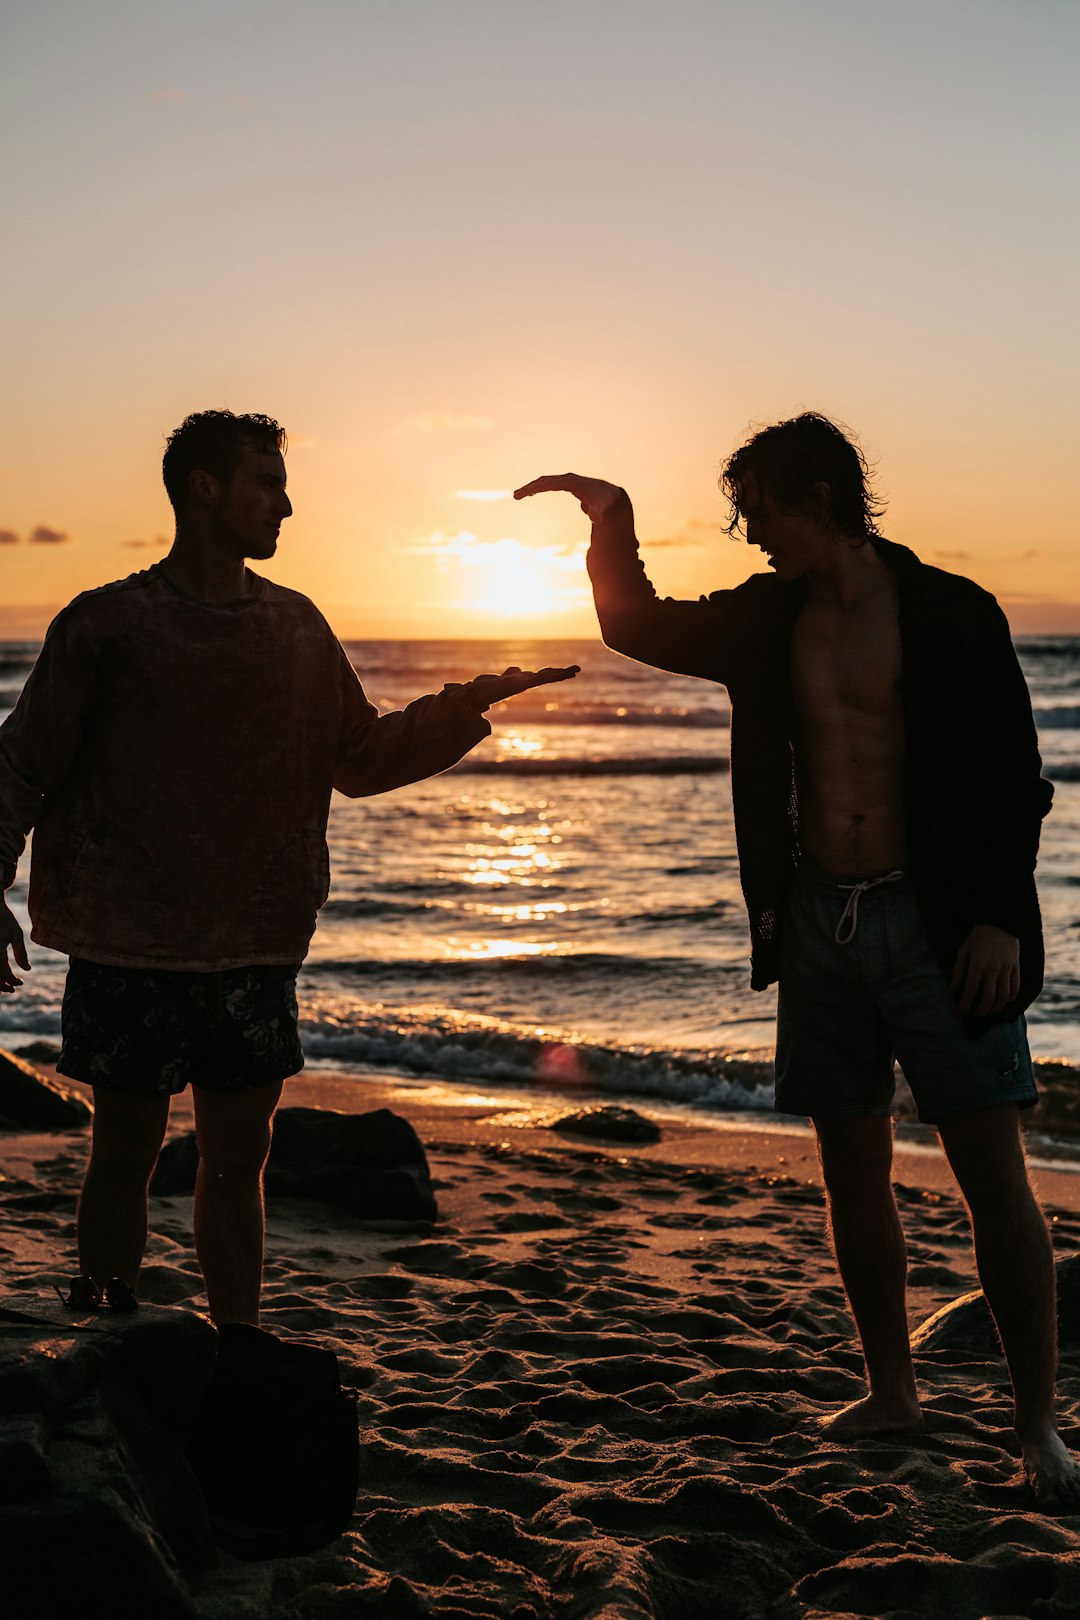 Close Up Photo Of Two Men Shaking Hands Near Beach At Sunset Photo Free Human Image On Unsplash